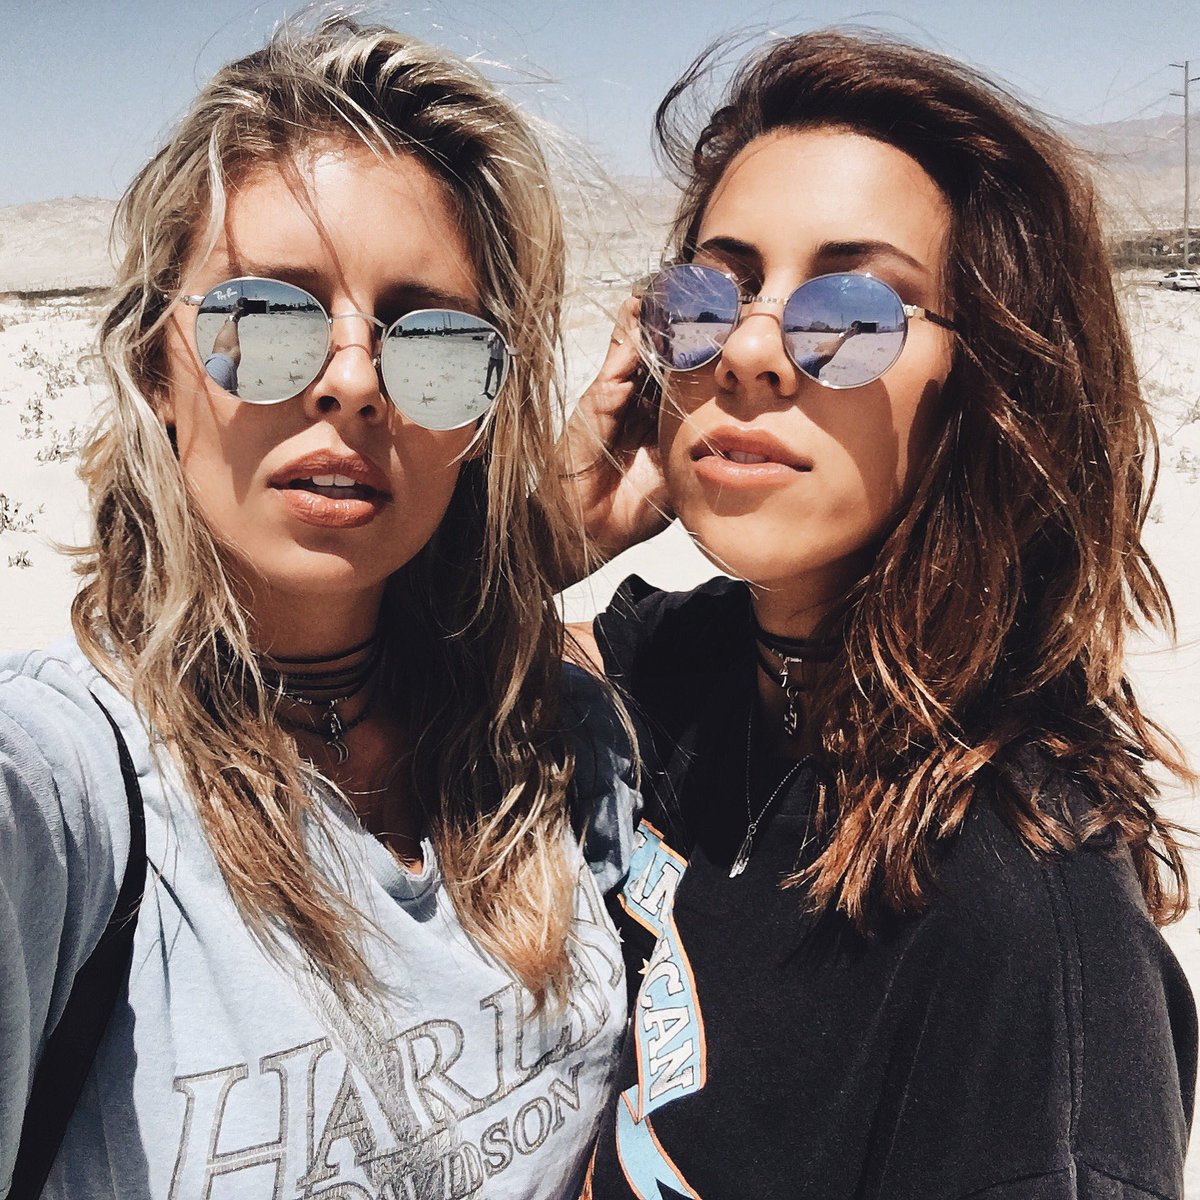 Desert hair ???? #Coachella2016 https://t.co/q59jKAJzBC